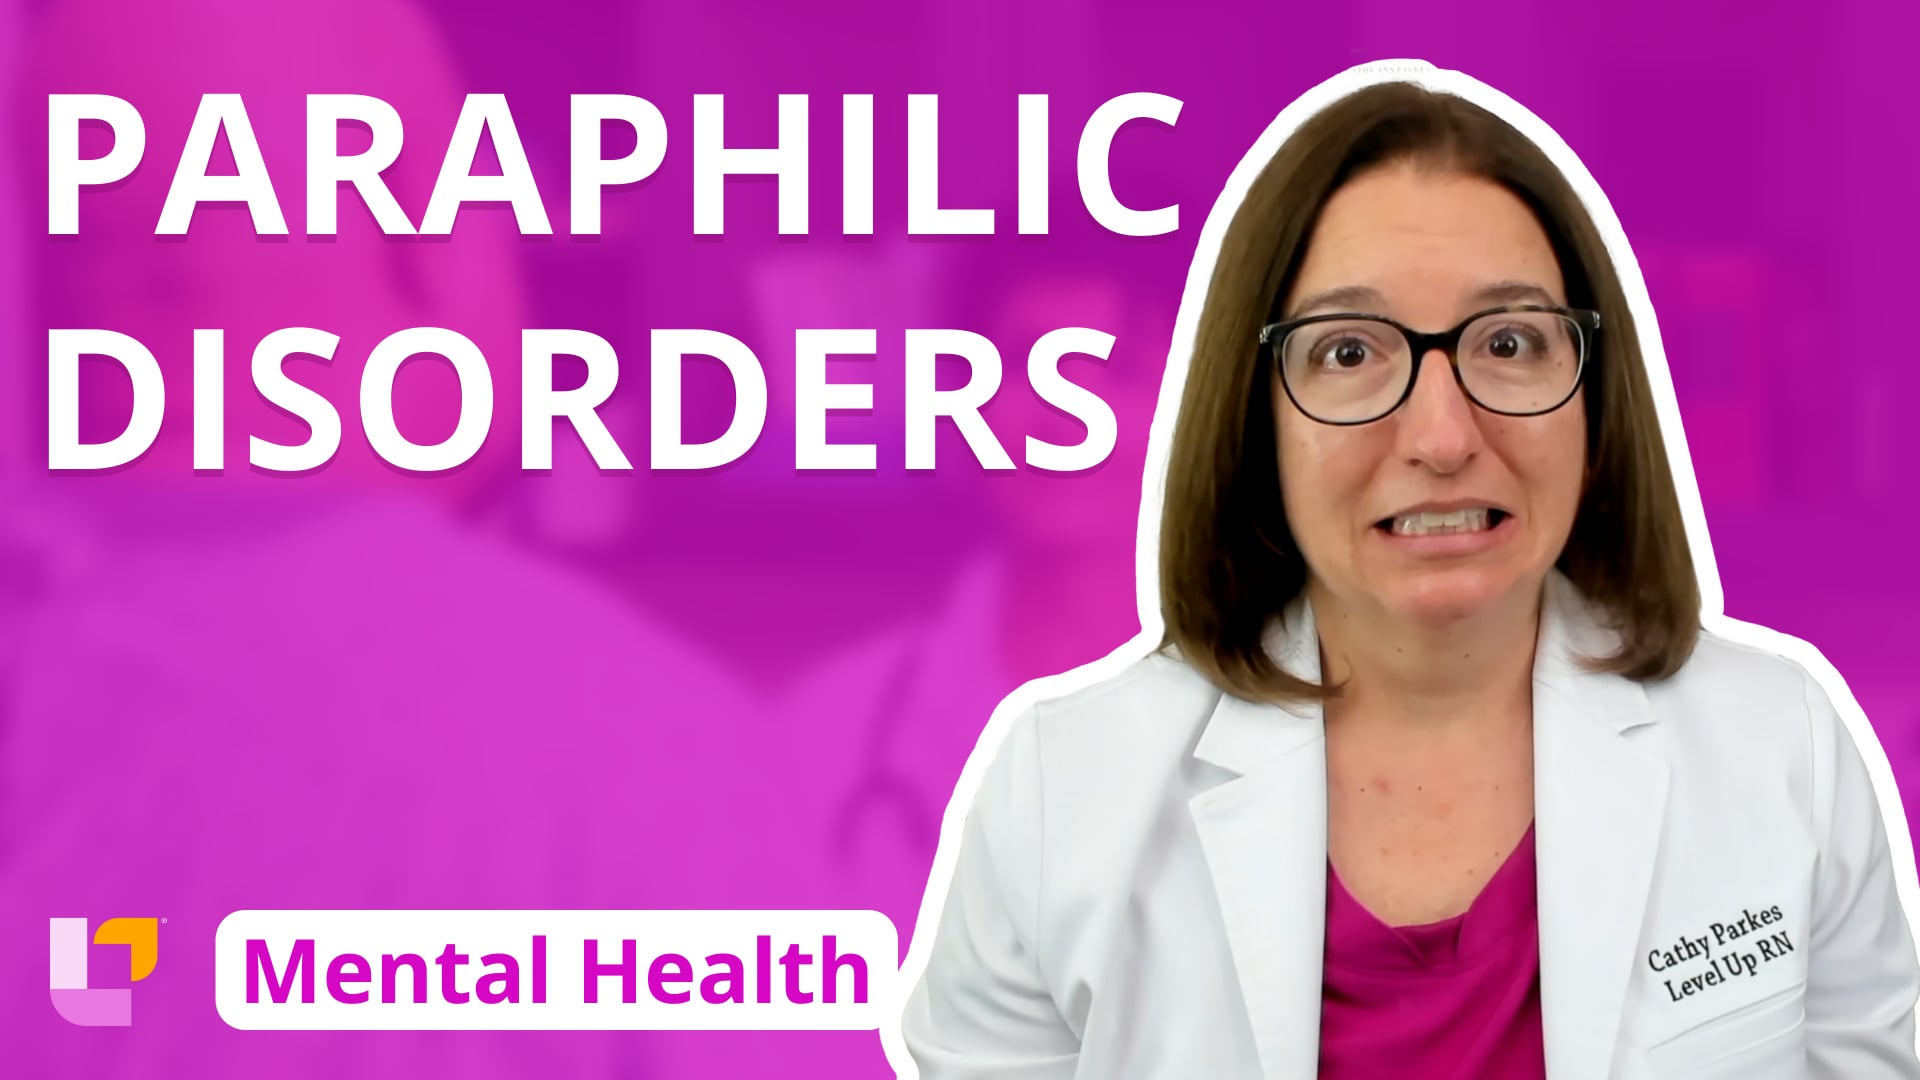 Psychiatric Mental Health - Disorders, part 40: Paraphilic Disorders